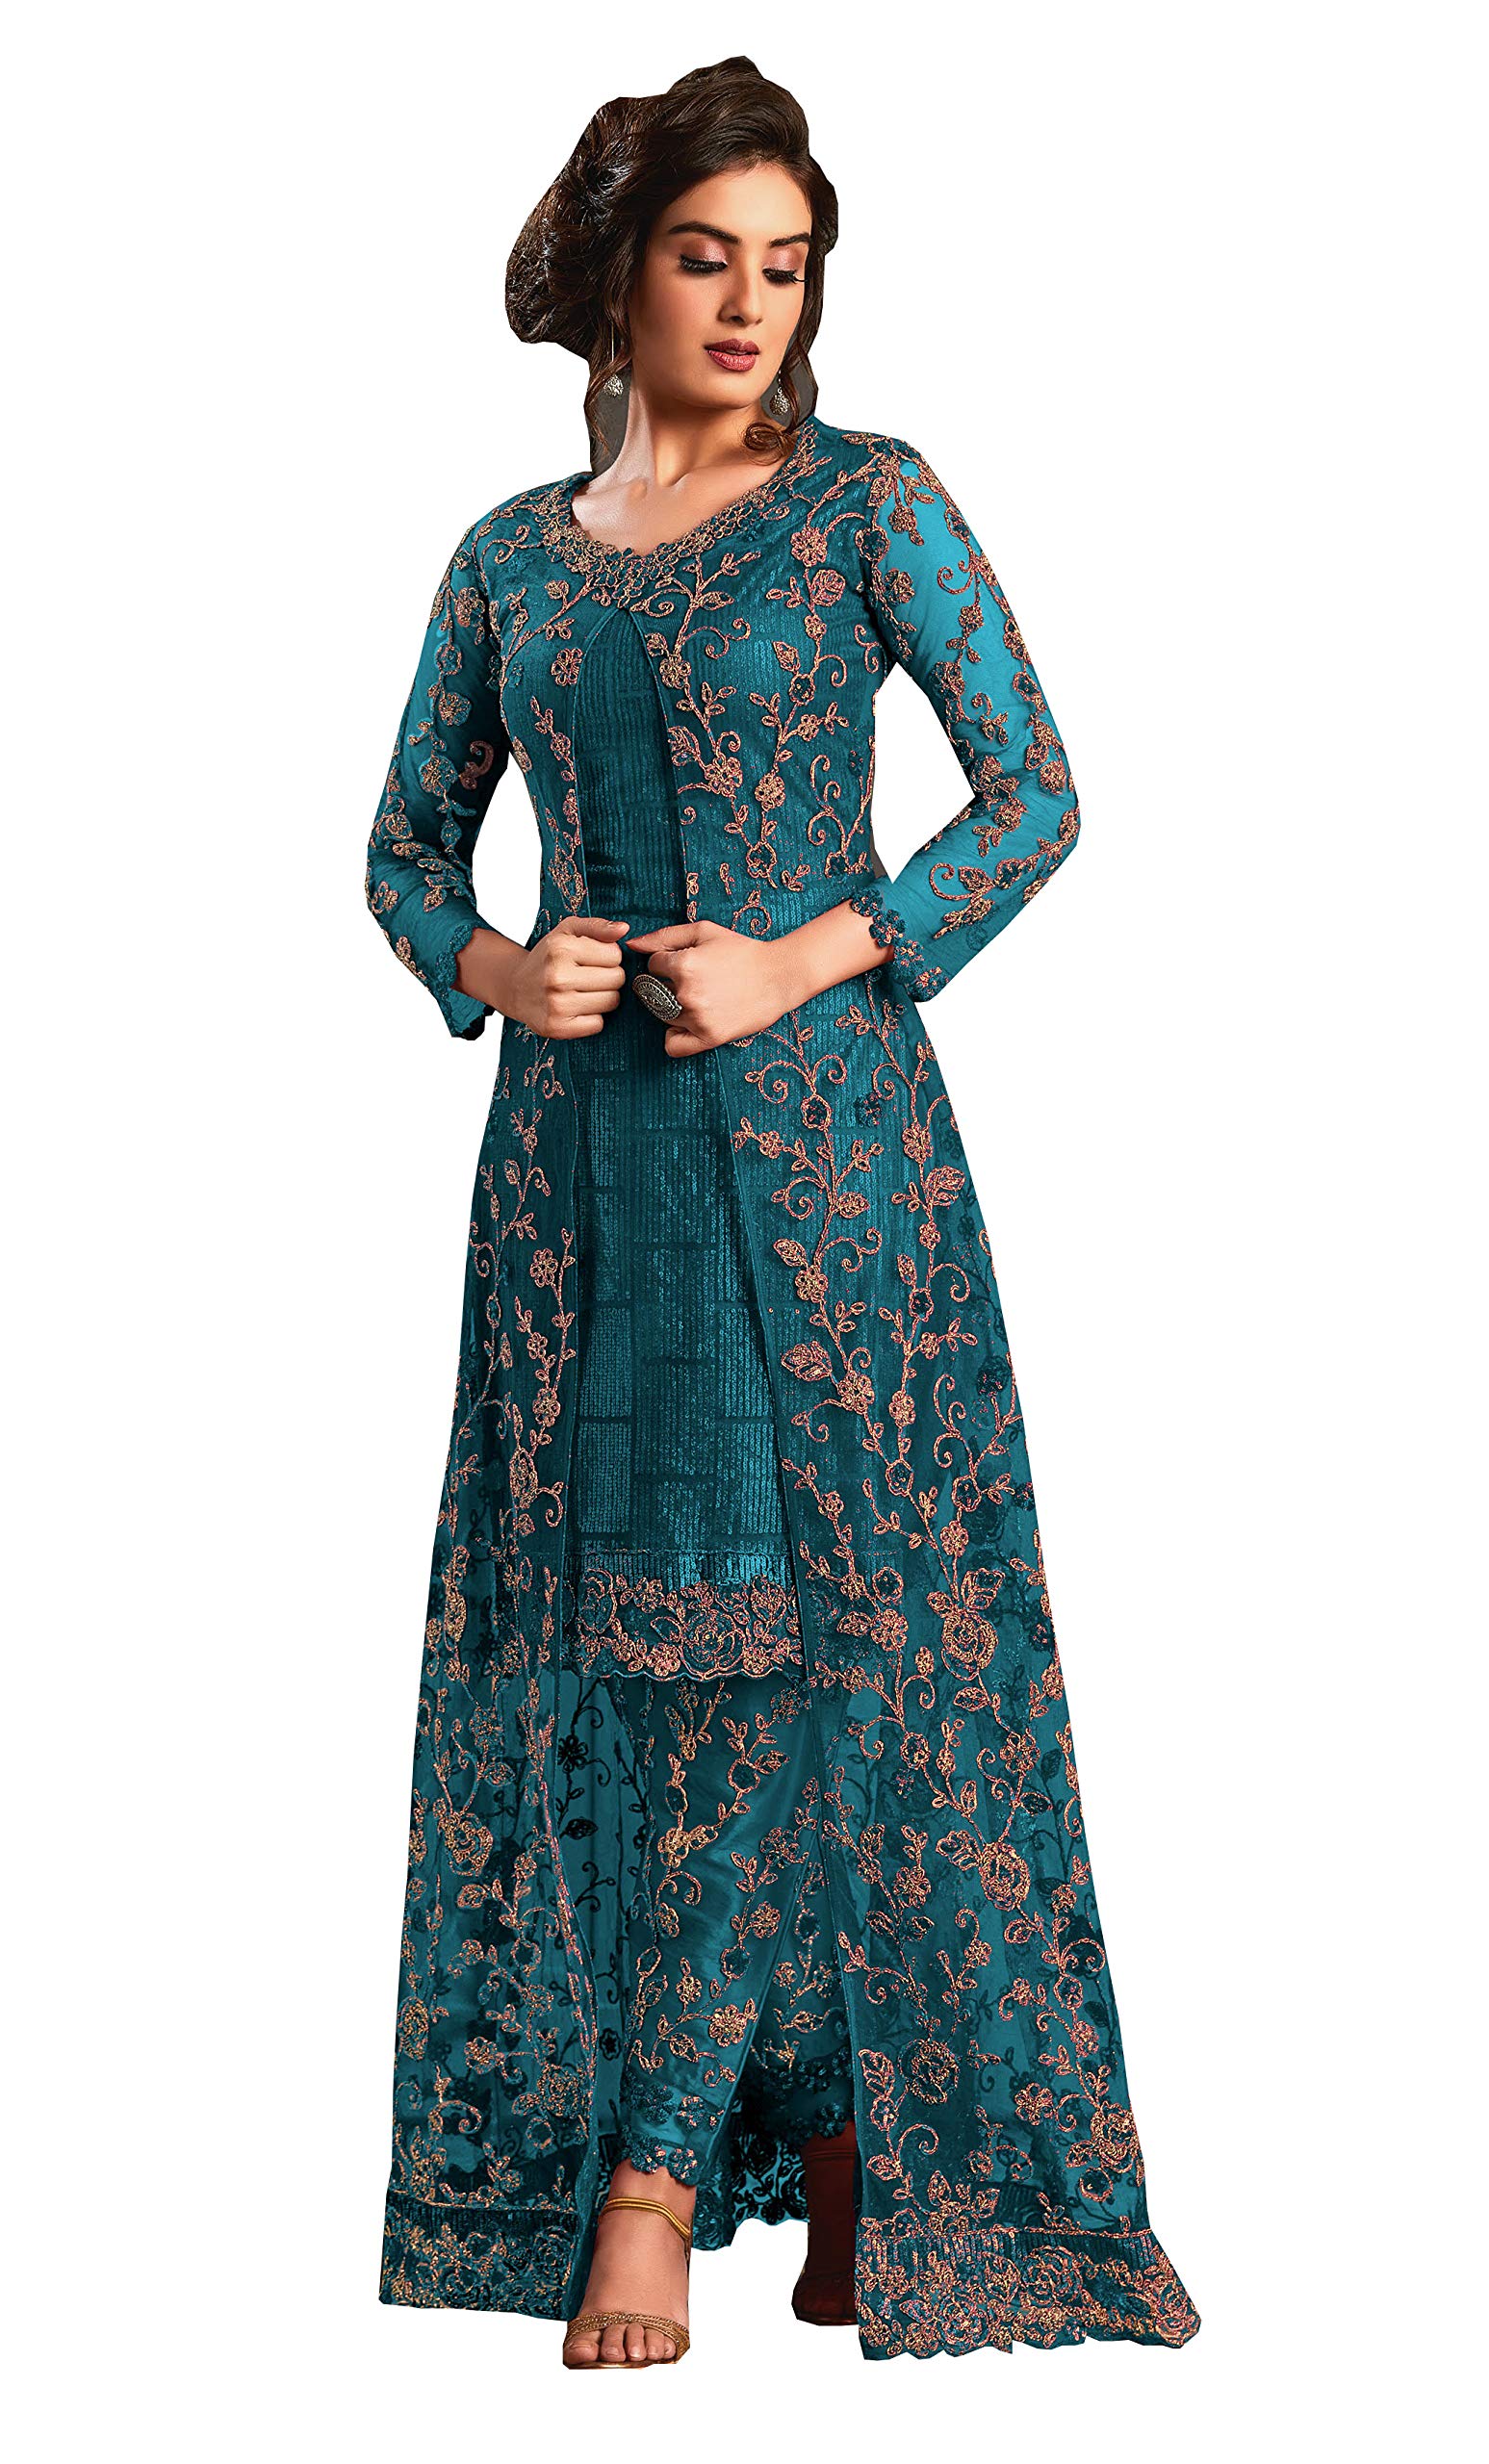 Jacquard 3pc stitched ladies dress/shlwar kameez Pakistani/indian style |  eBay